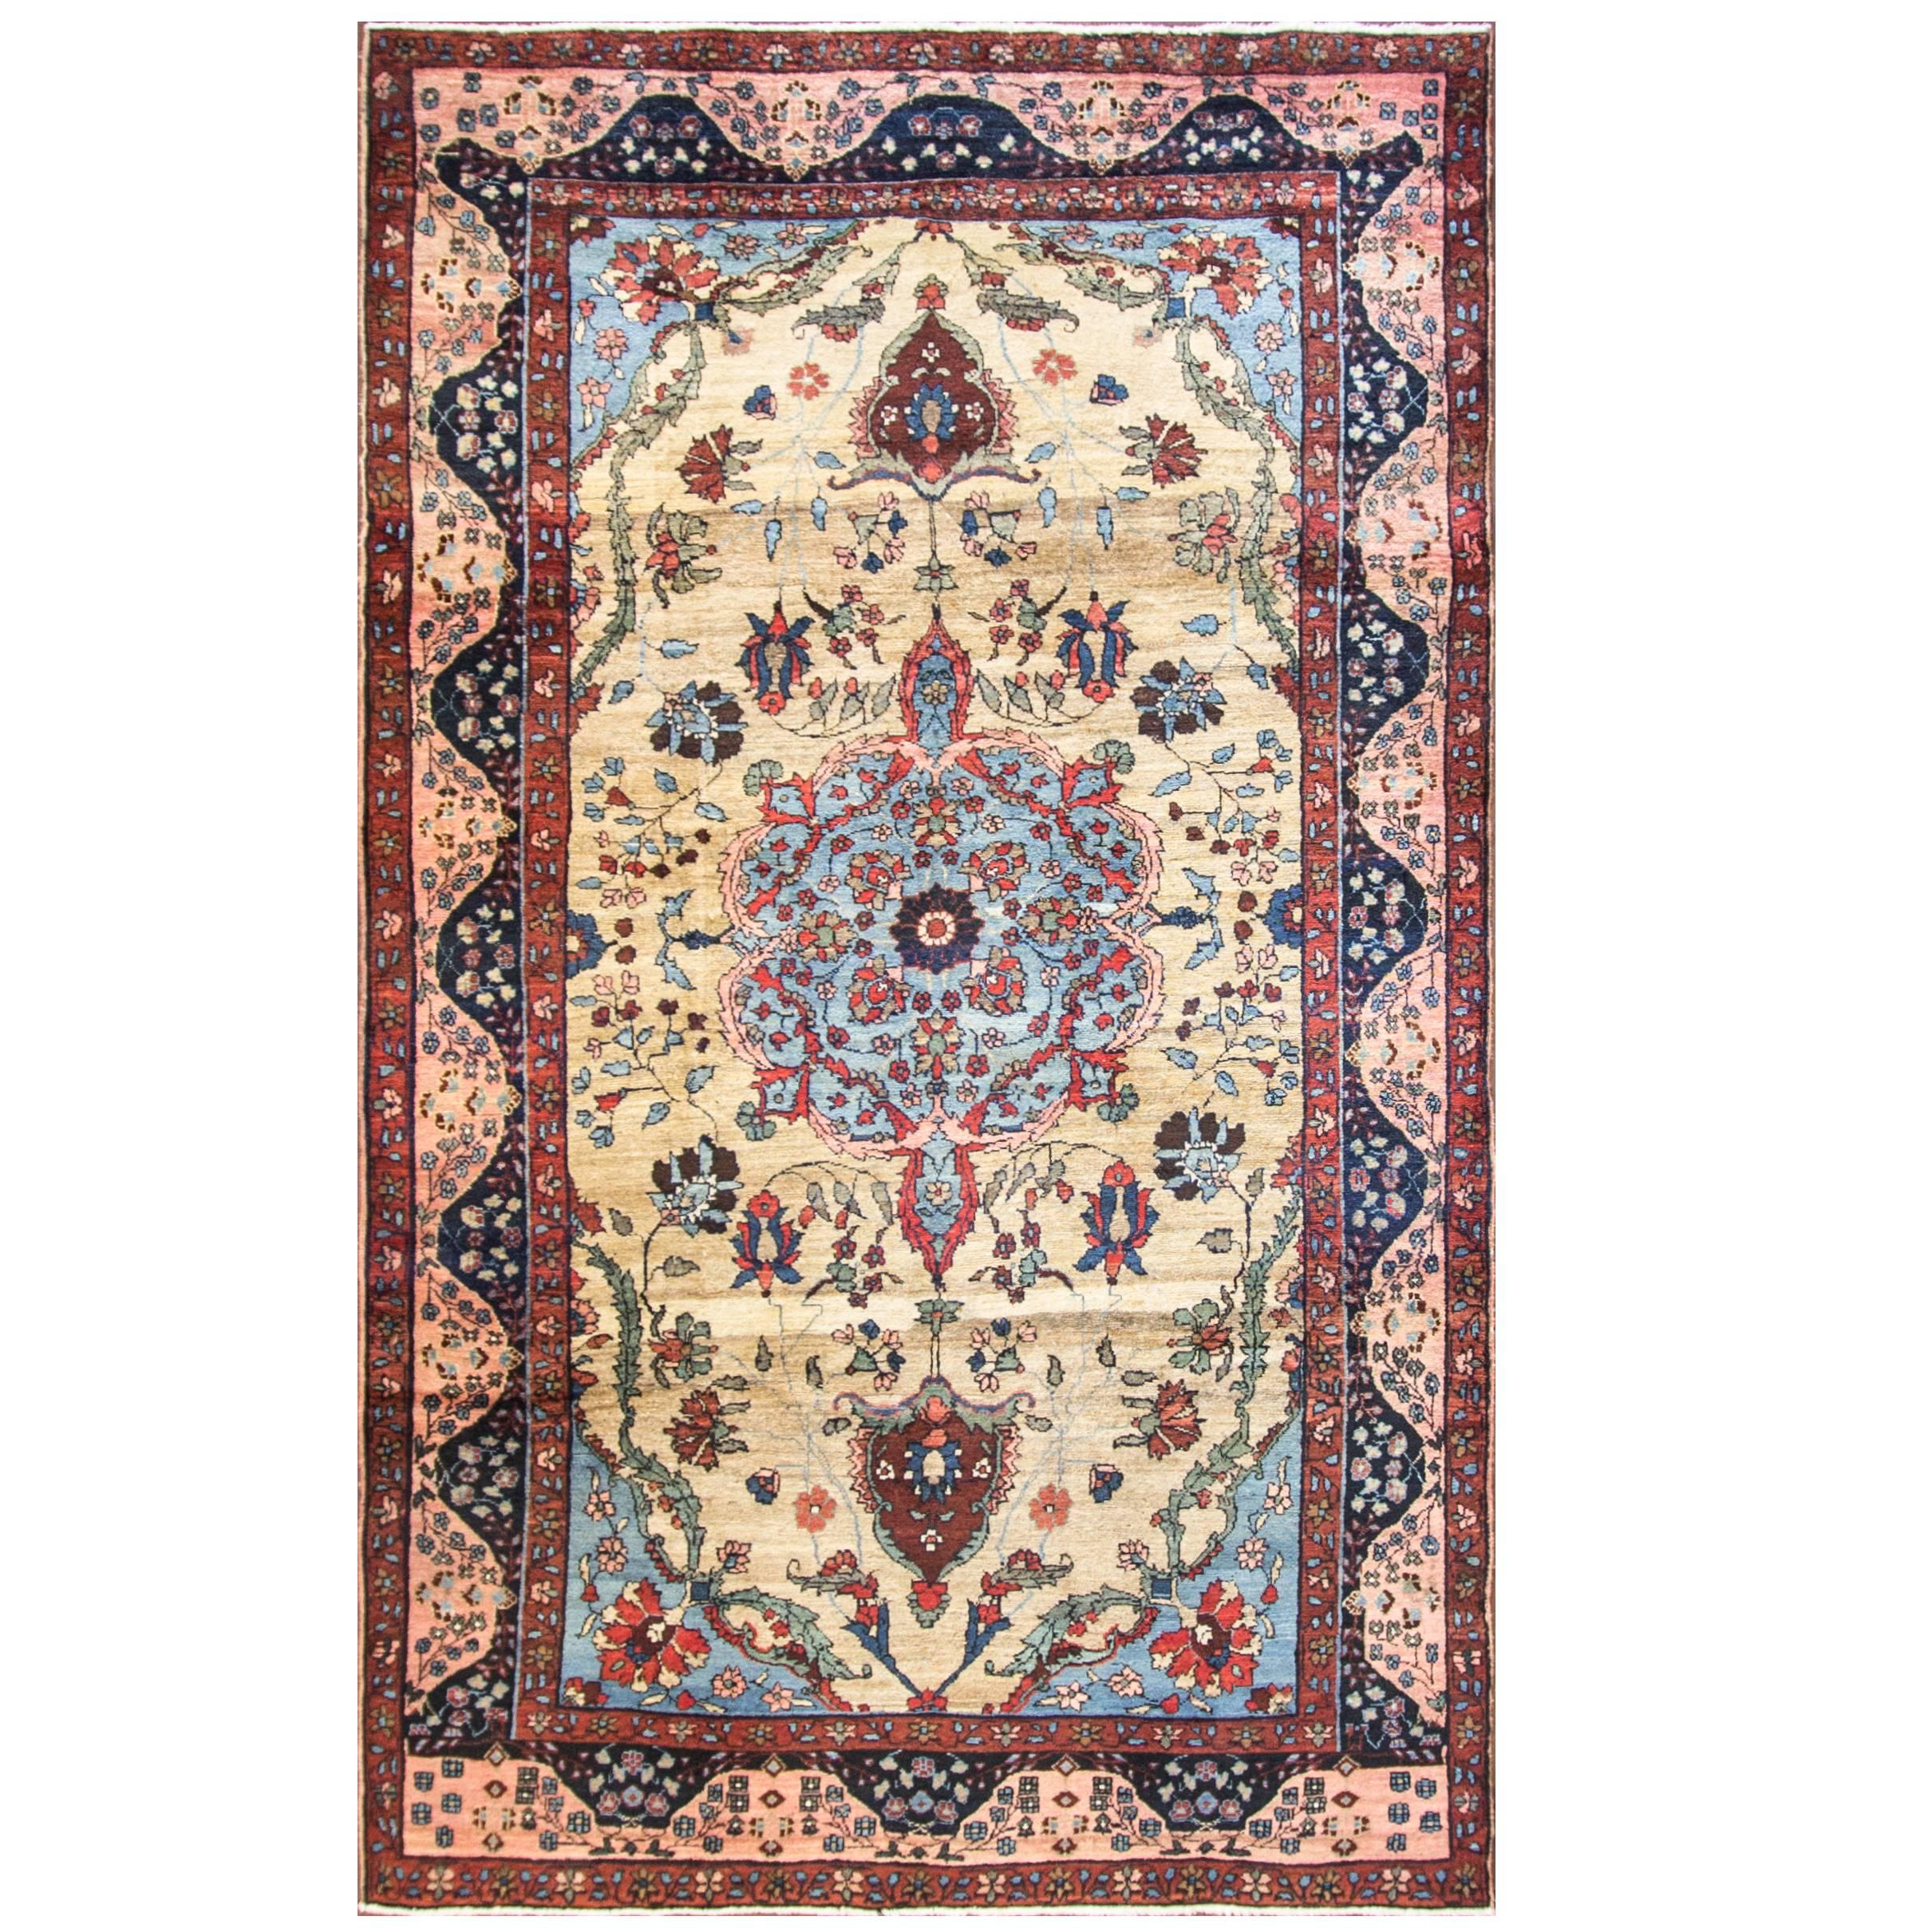 Antique Persian Tabriz Carpet, 6'6" x 10'7"